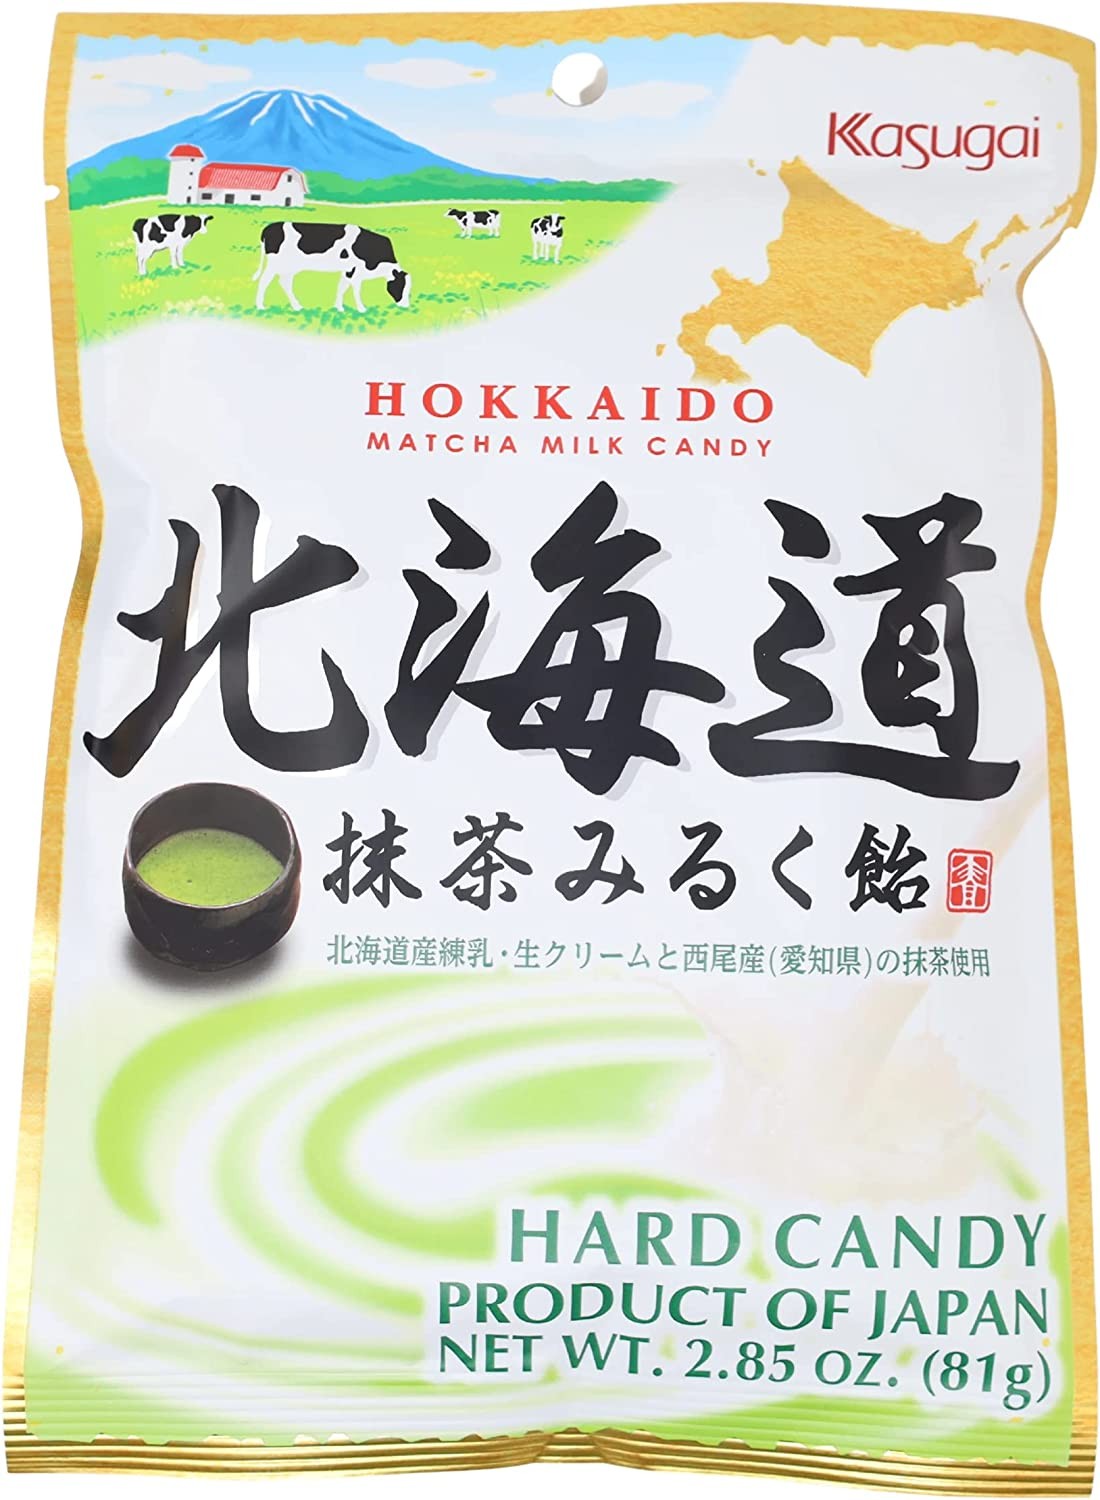 kasugai-hokkaido-macha-milk-candyl